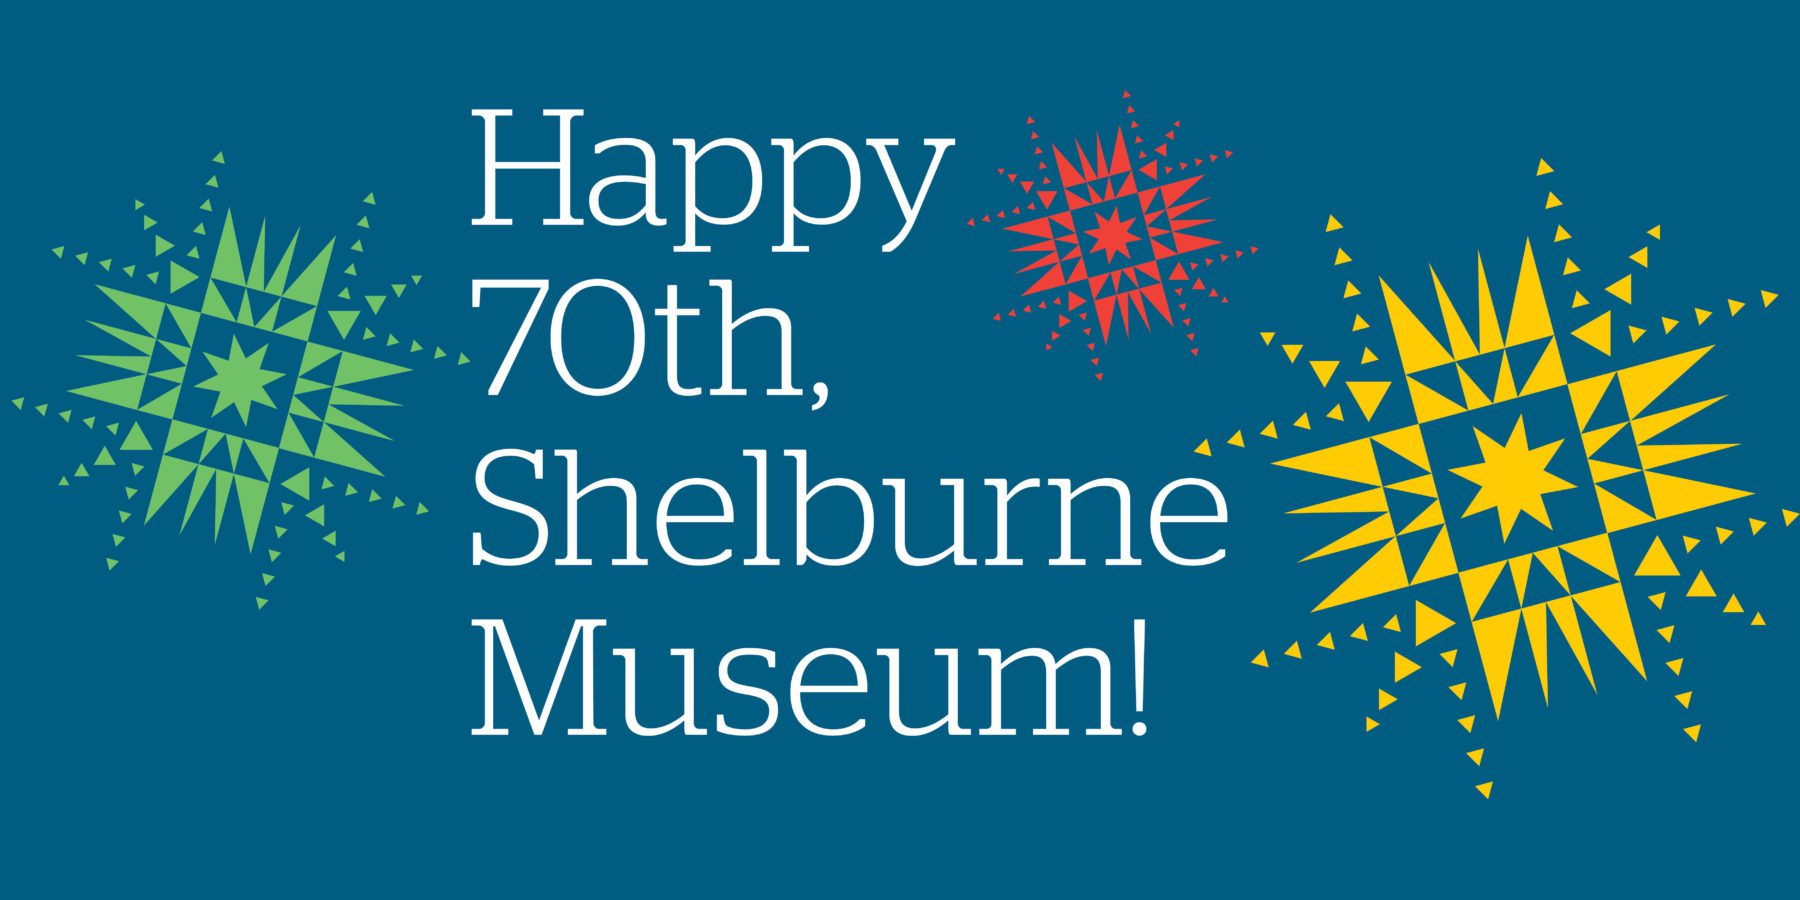 Happy 70th Birthday, Shelburne Museum